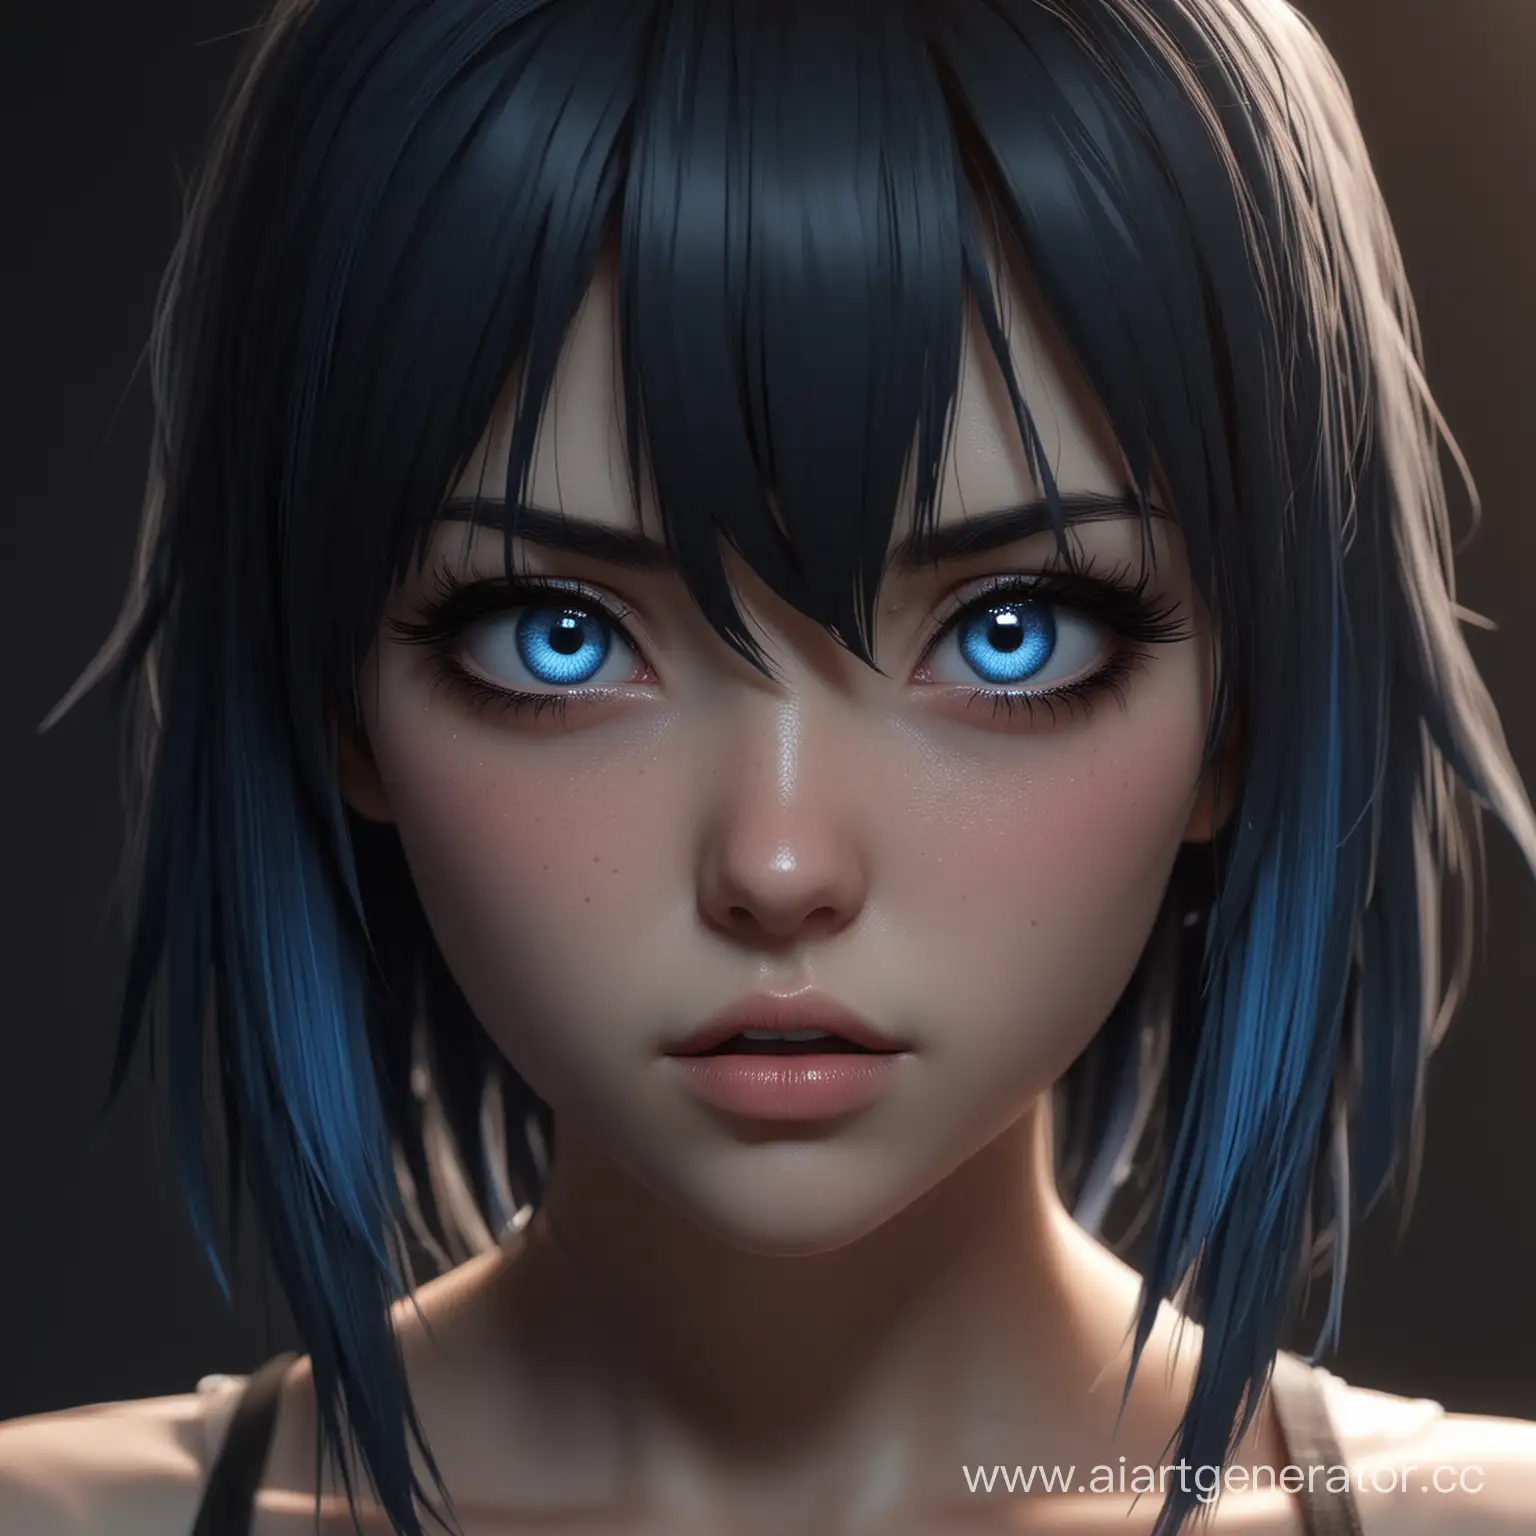 Intense-3D-Anime-Girl-Portrait-in-Dark-Room-with-Blue-Light